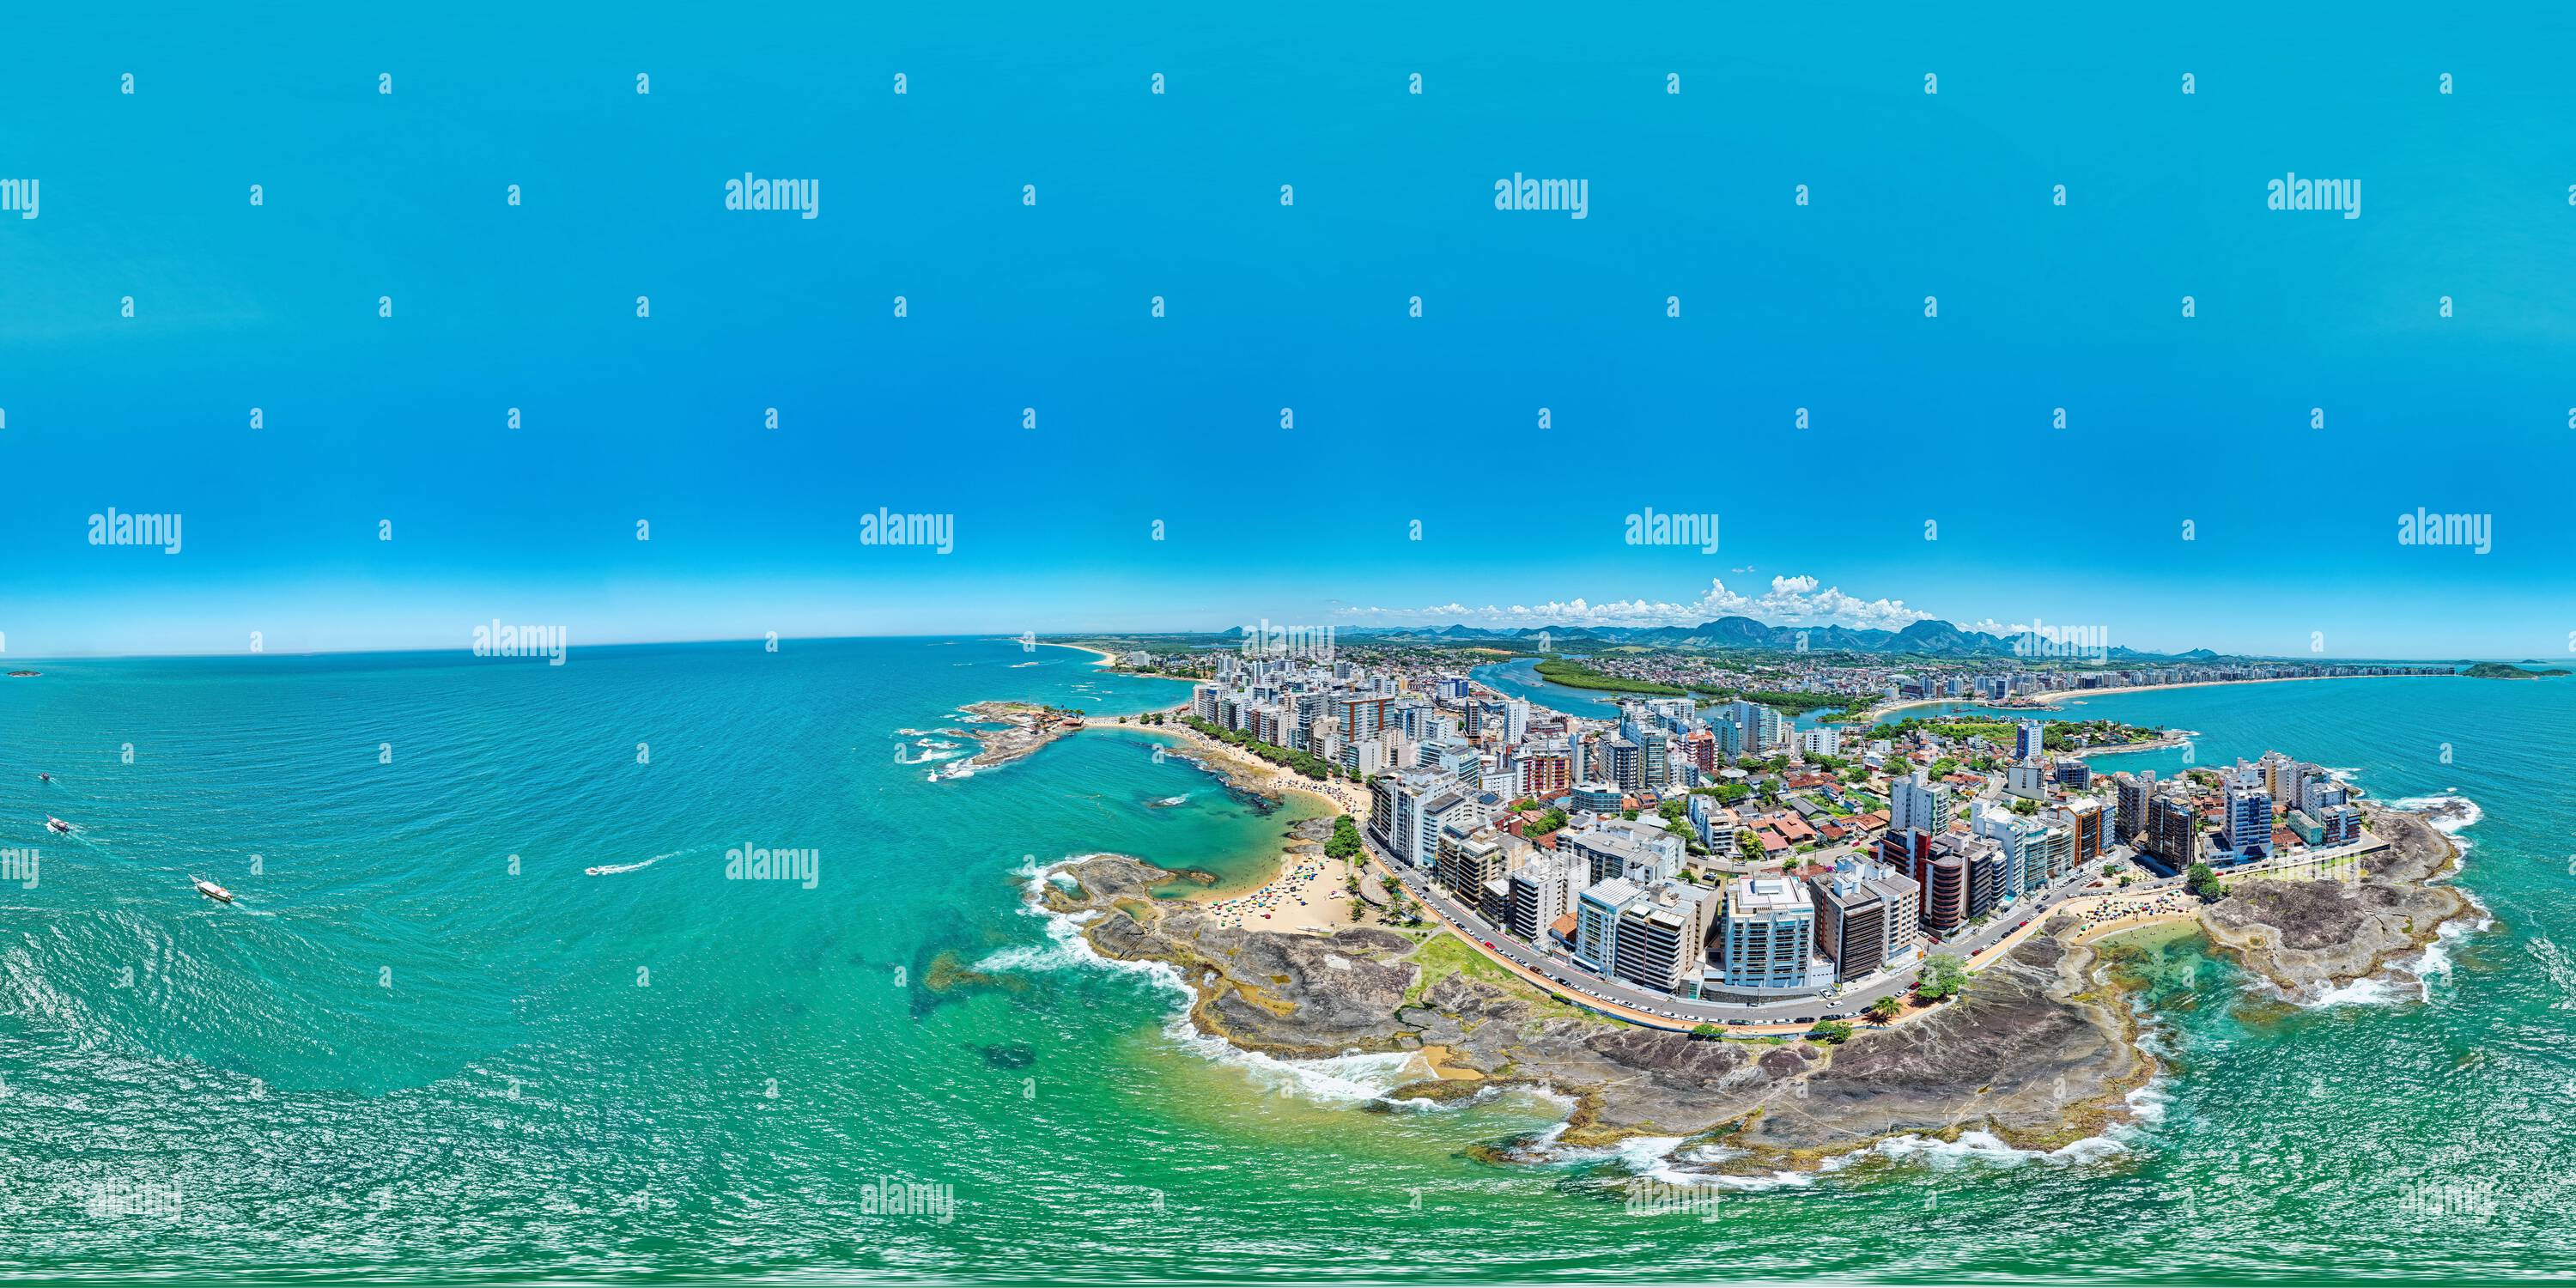 360 degree panoramic view of 360º aerial image of the center of the city of Guarapari - State of Espírito Santo - Brazil. Beaches: Areia Preta, Castanheiras, Valentine, Virtudes.